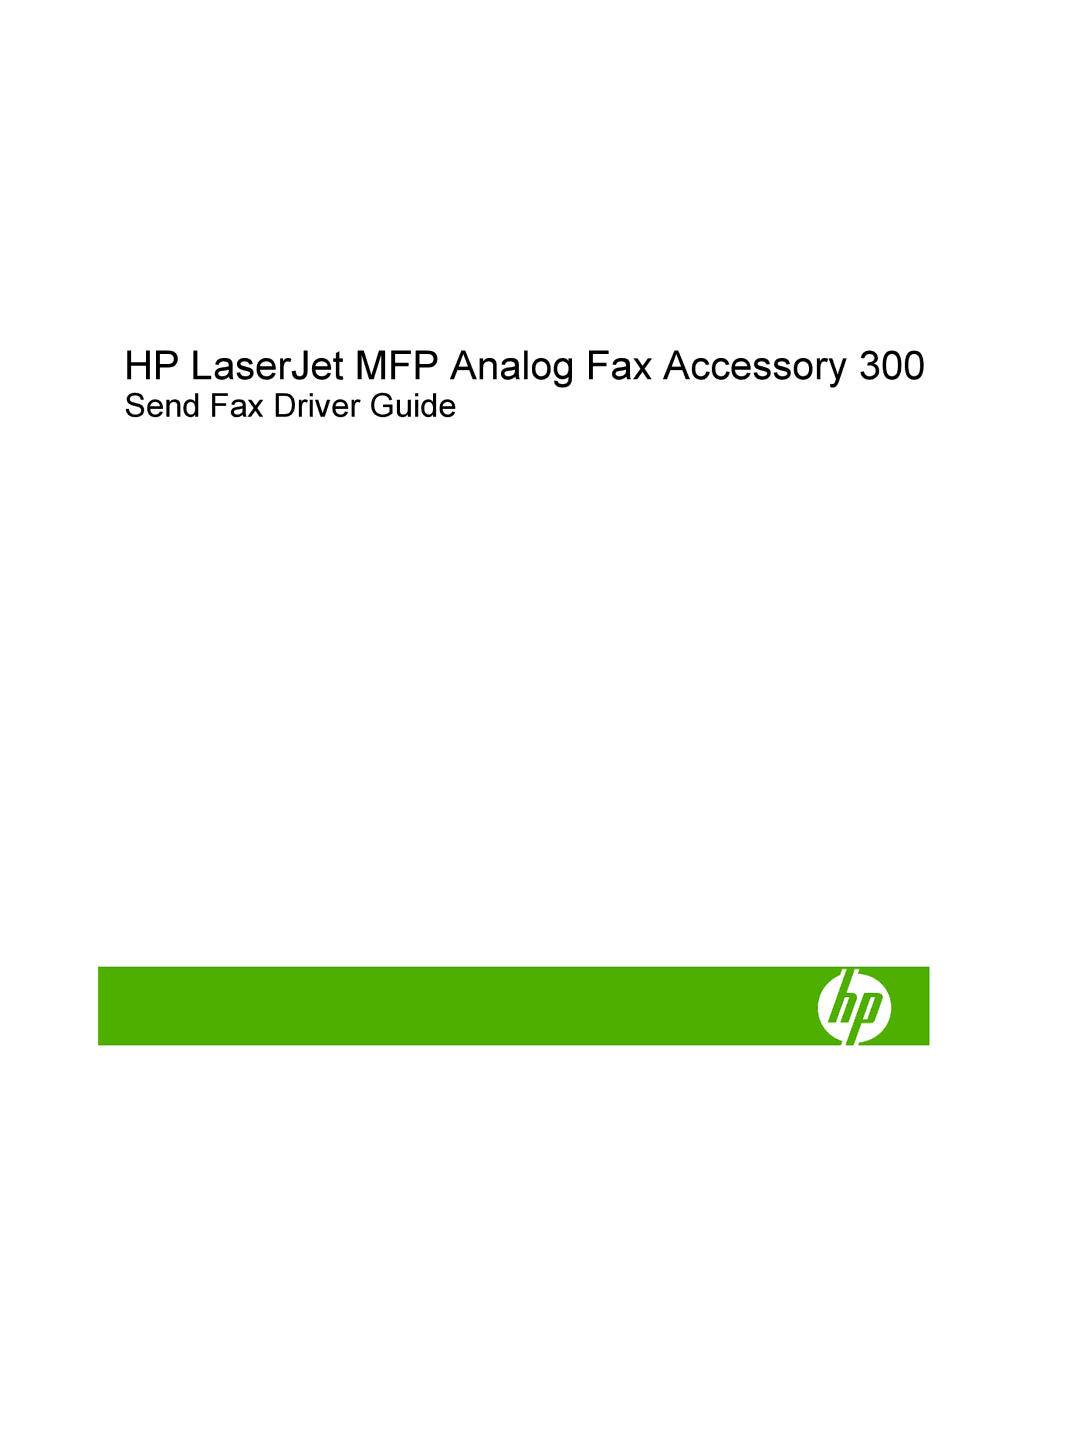 Jabra 300 manual HP LaserJet MFP Analog Fax Accessory 